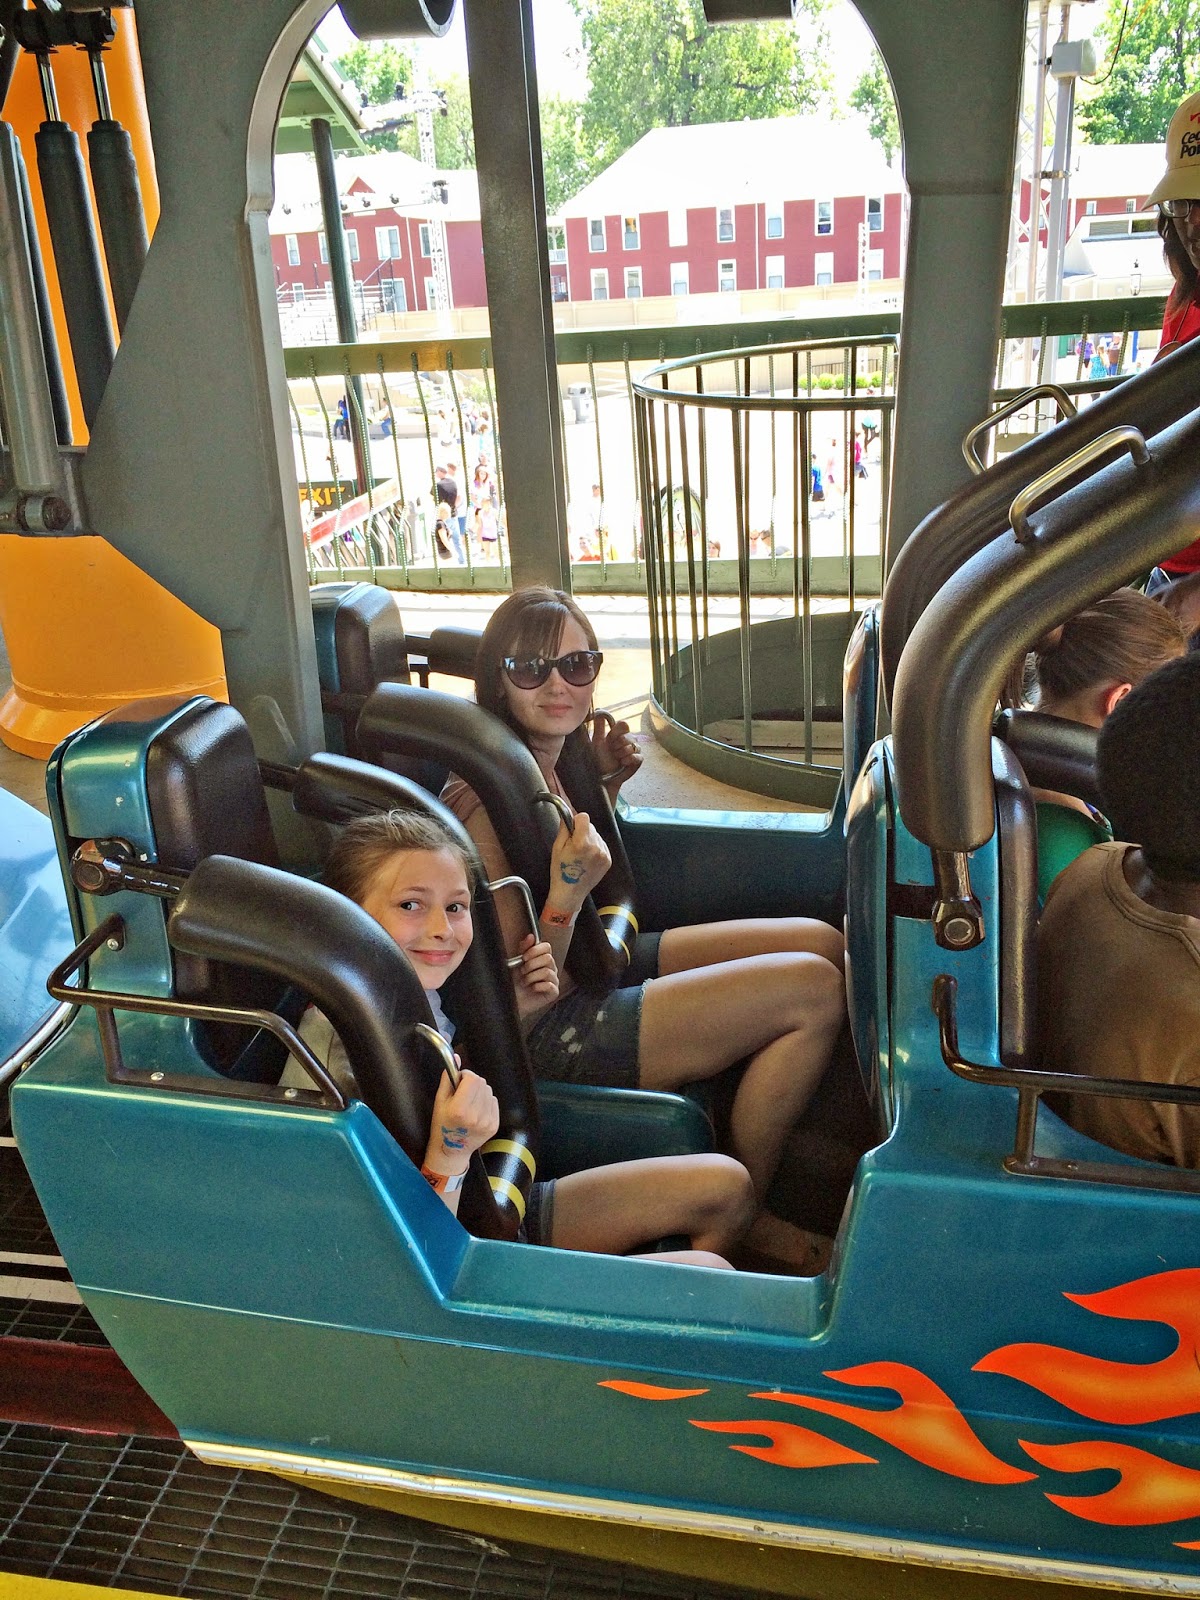 Cedar Point Roller Coaster